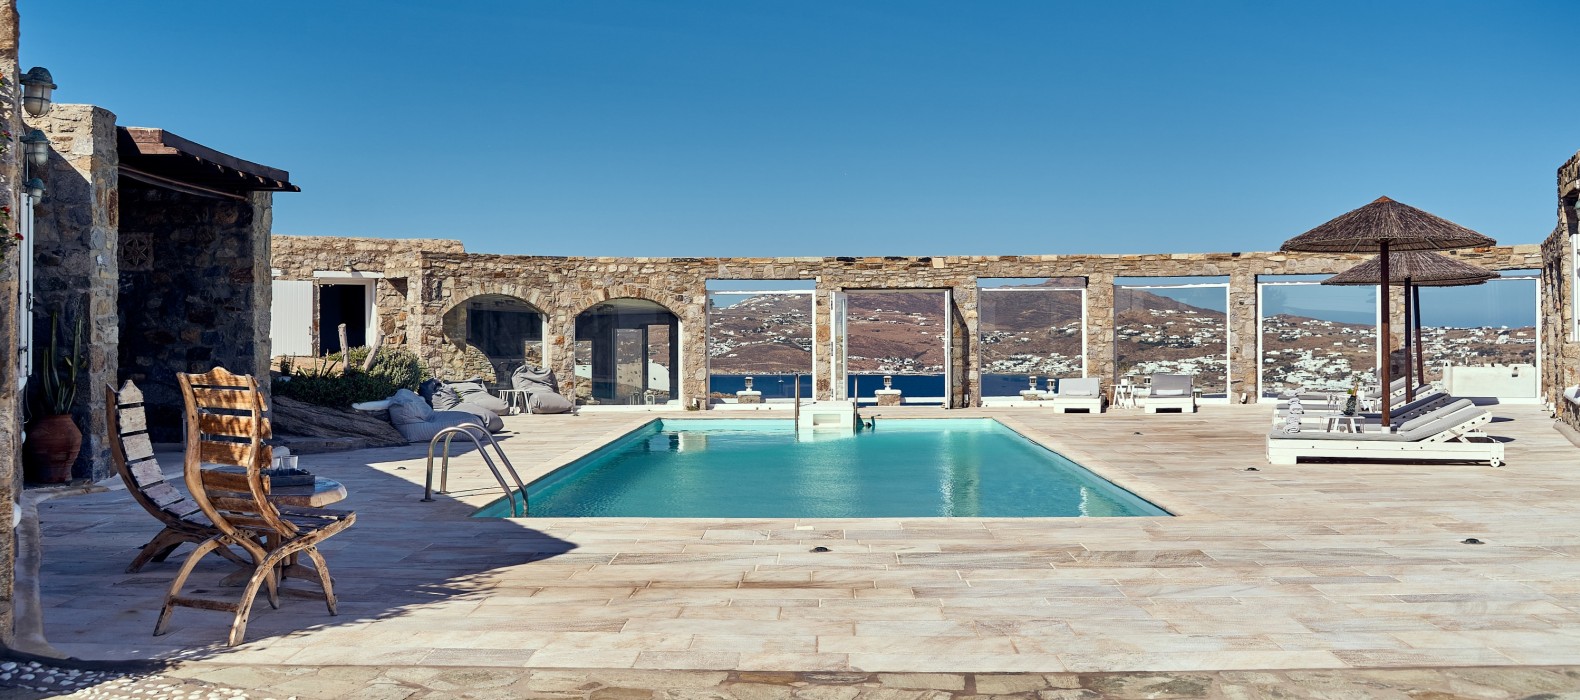 Exterior pool area of Villa Mura Mura in Mykonos